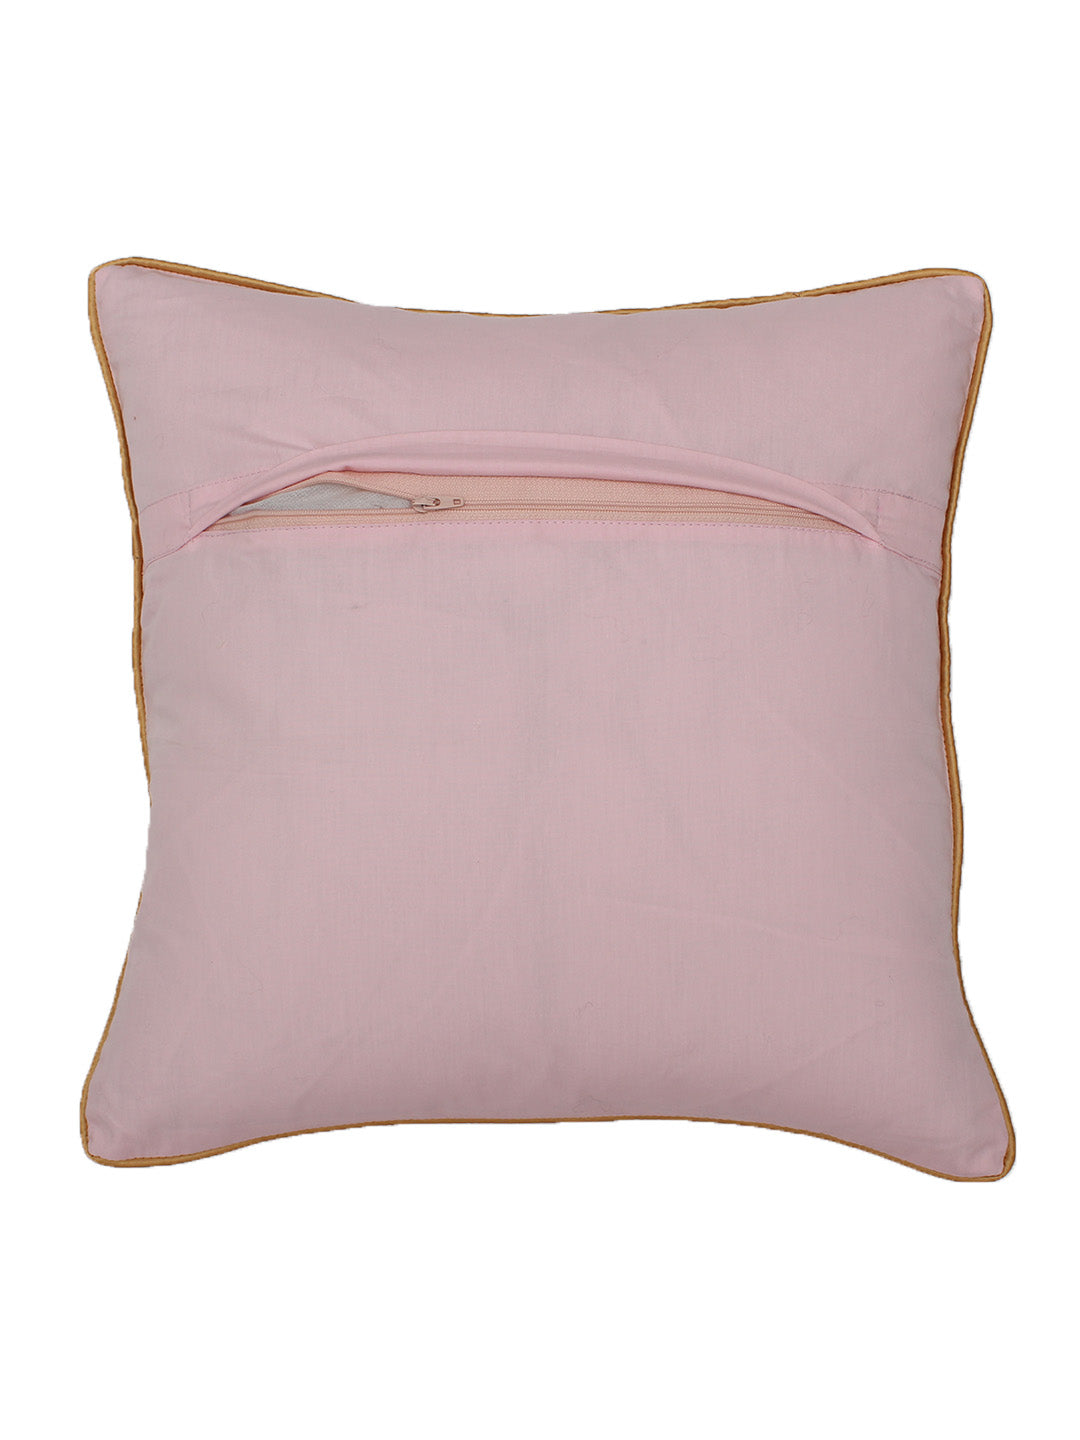 Jaleb Chowk Cushion Cover (Pink)